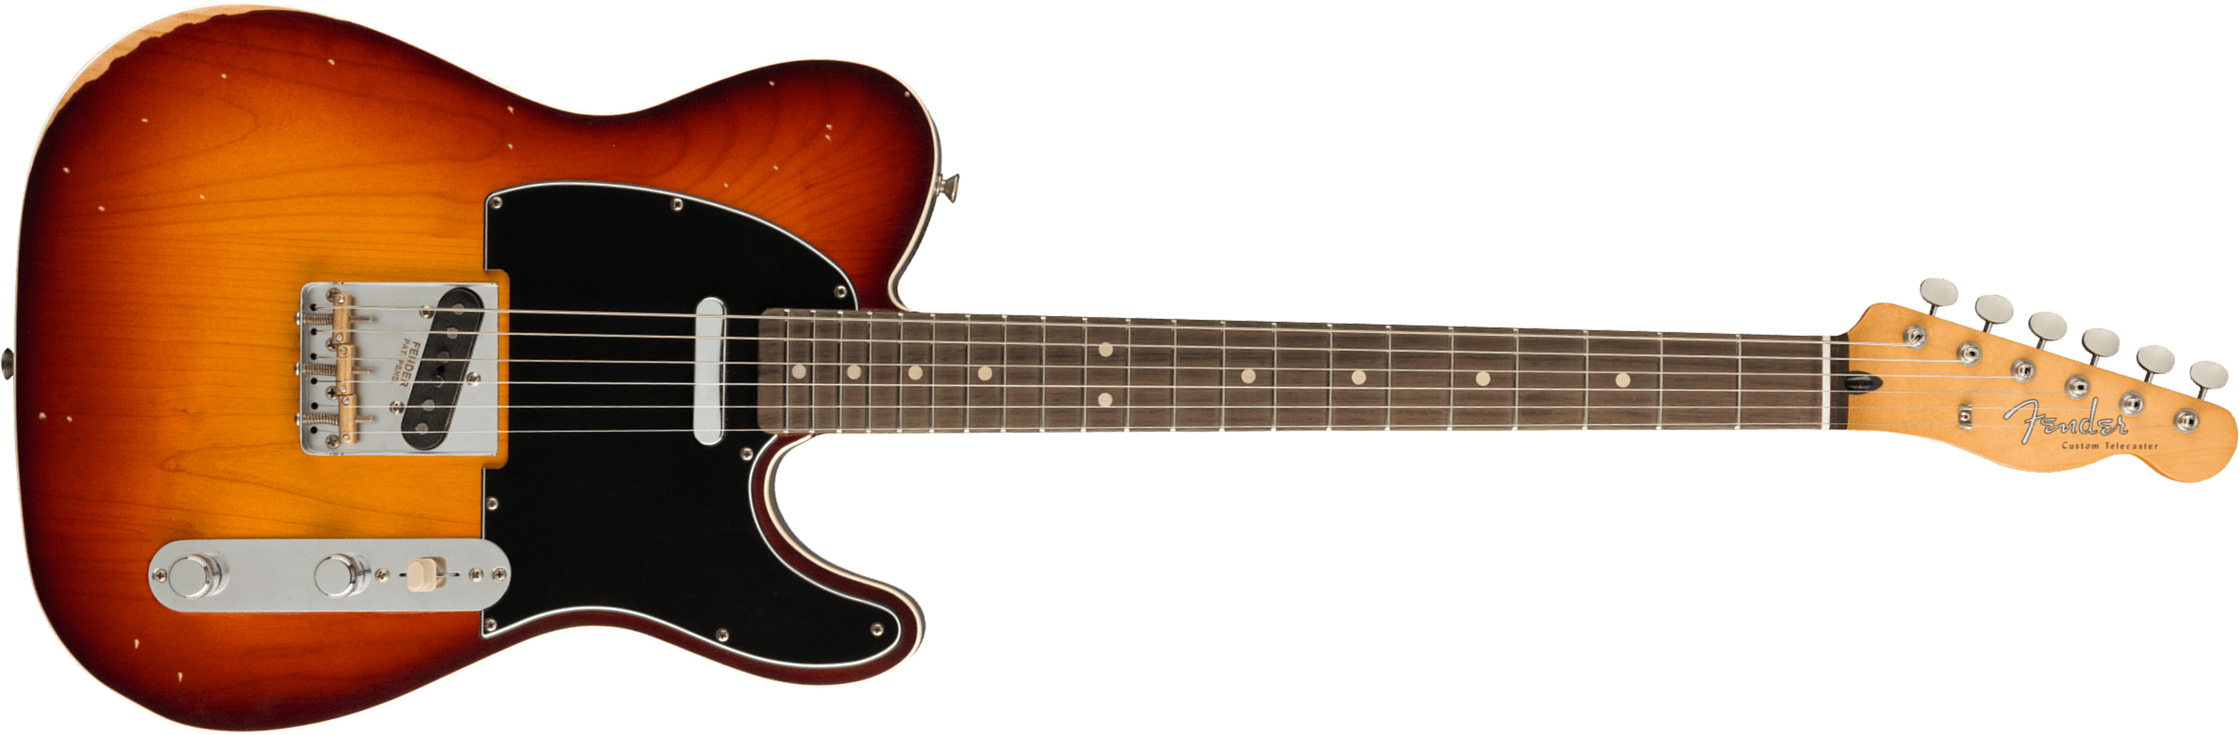 Fender Jason Isbell Tele Custom Signature Rw +housse - Road Worn 3-color Chocolate Burst - E-Gitarre in Teleform - Main picture